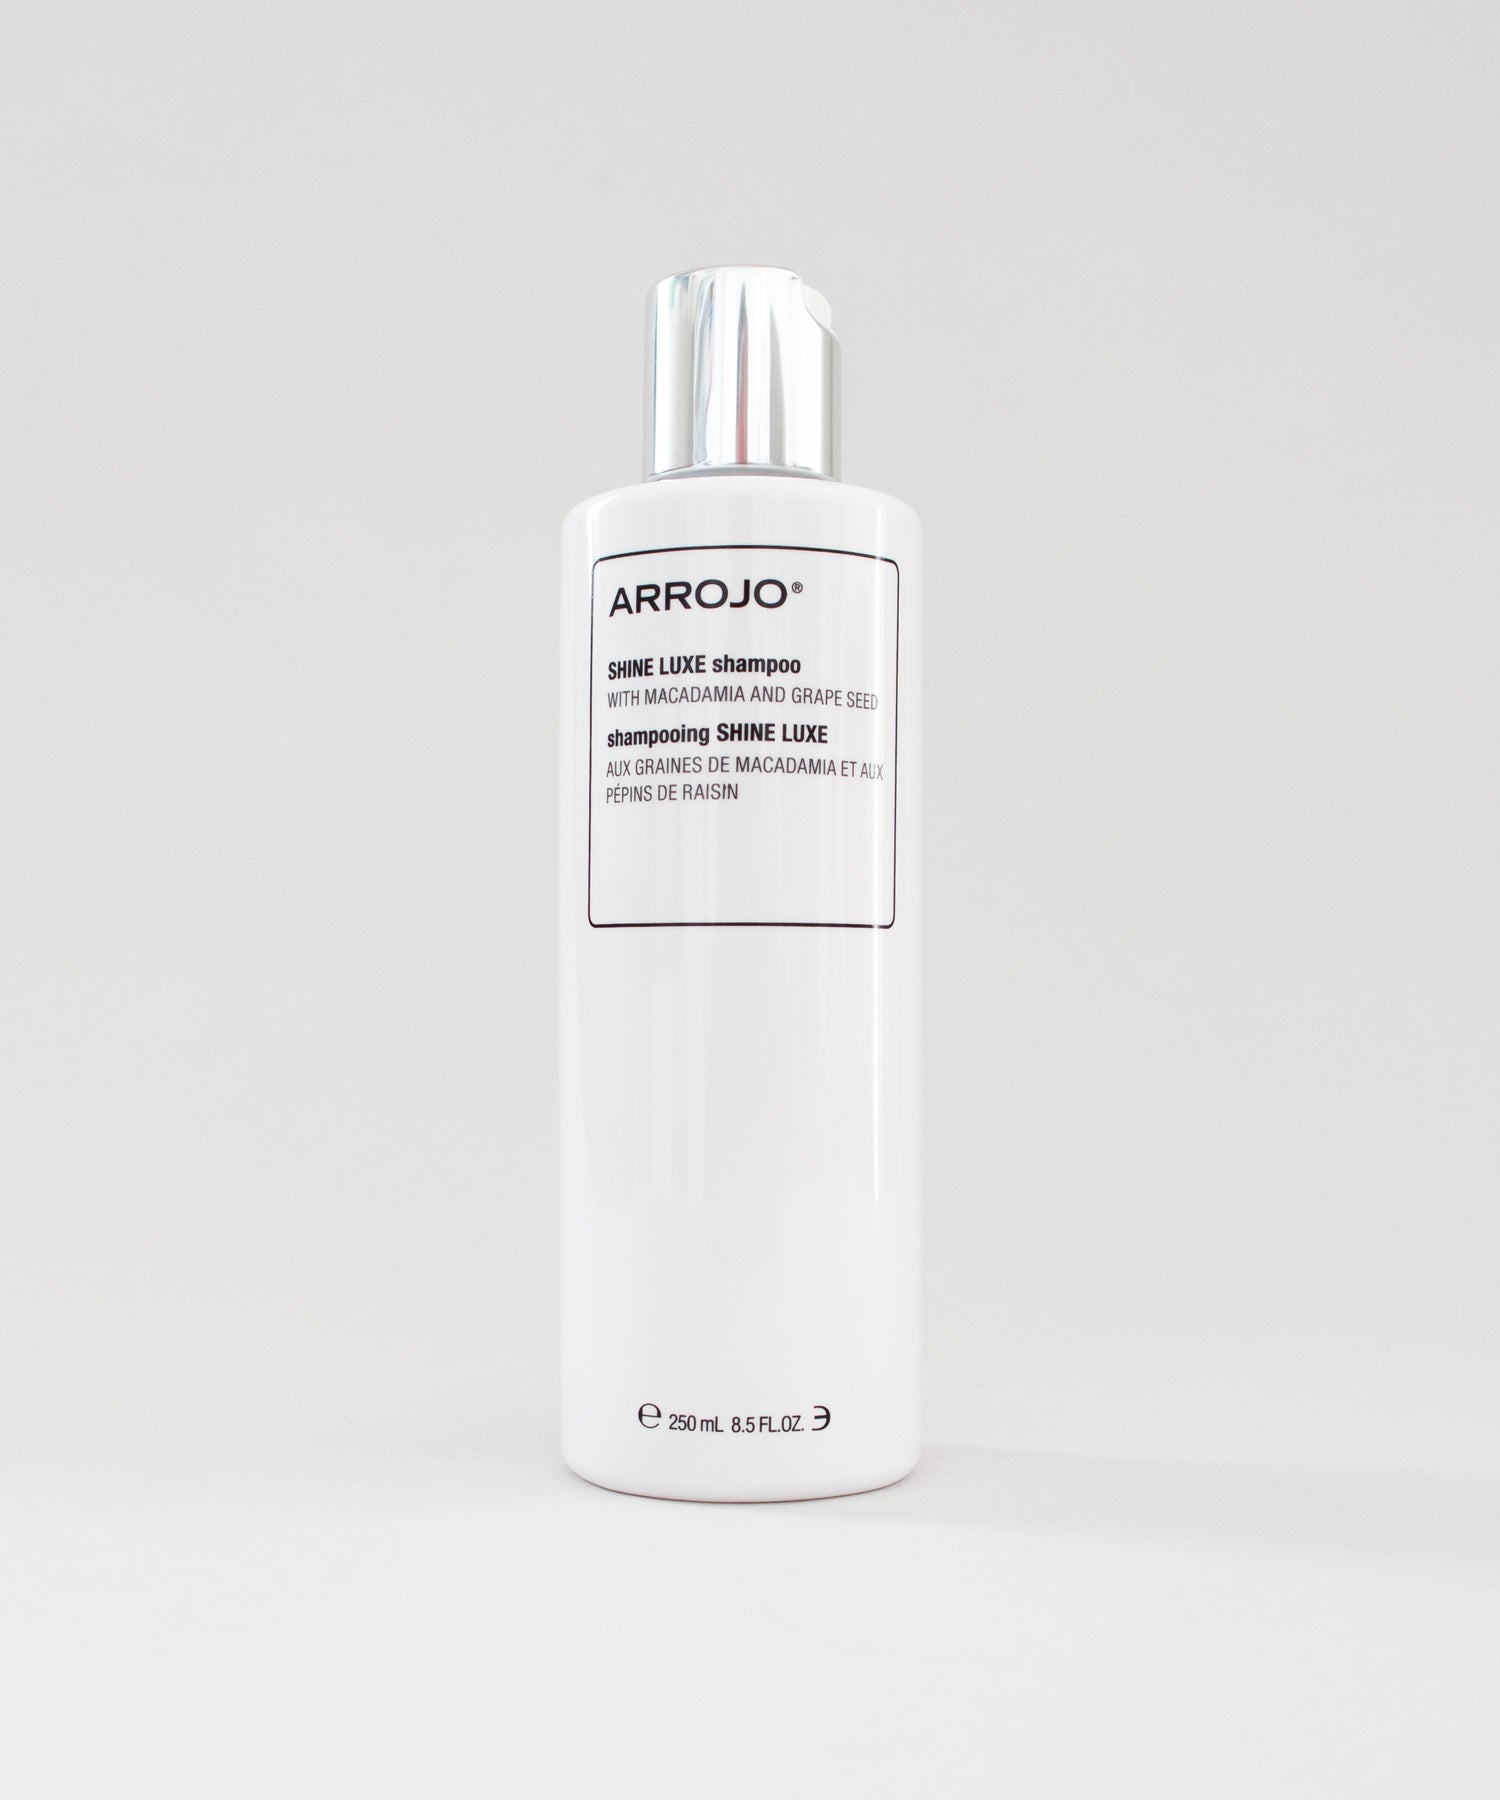 Arrojo luxurious SHINE LUXE shampoo adds moisture, softness, smoothness, and sheen.